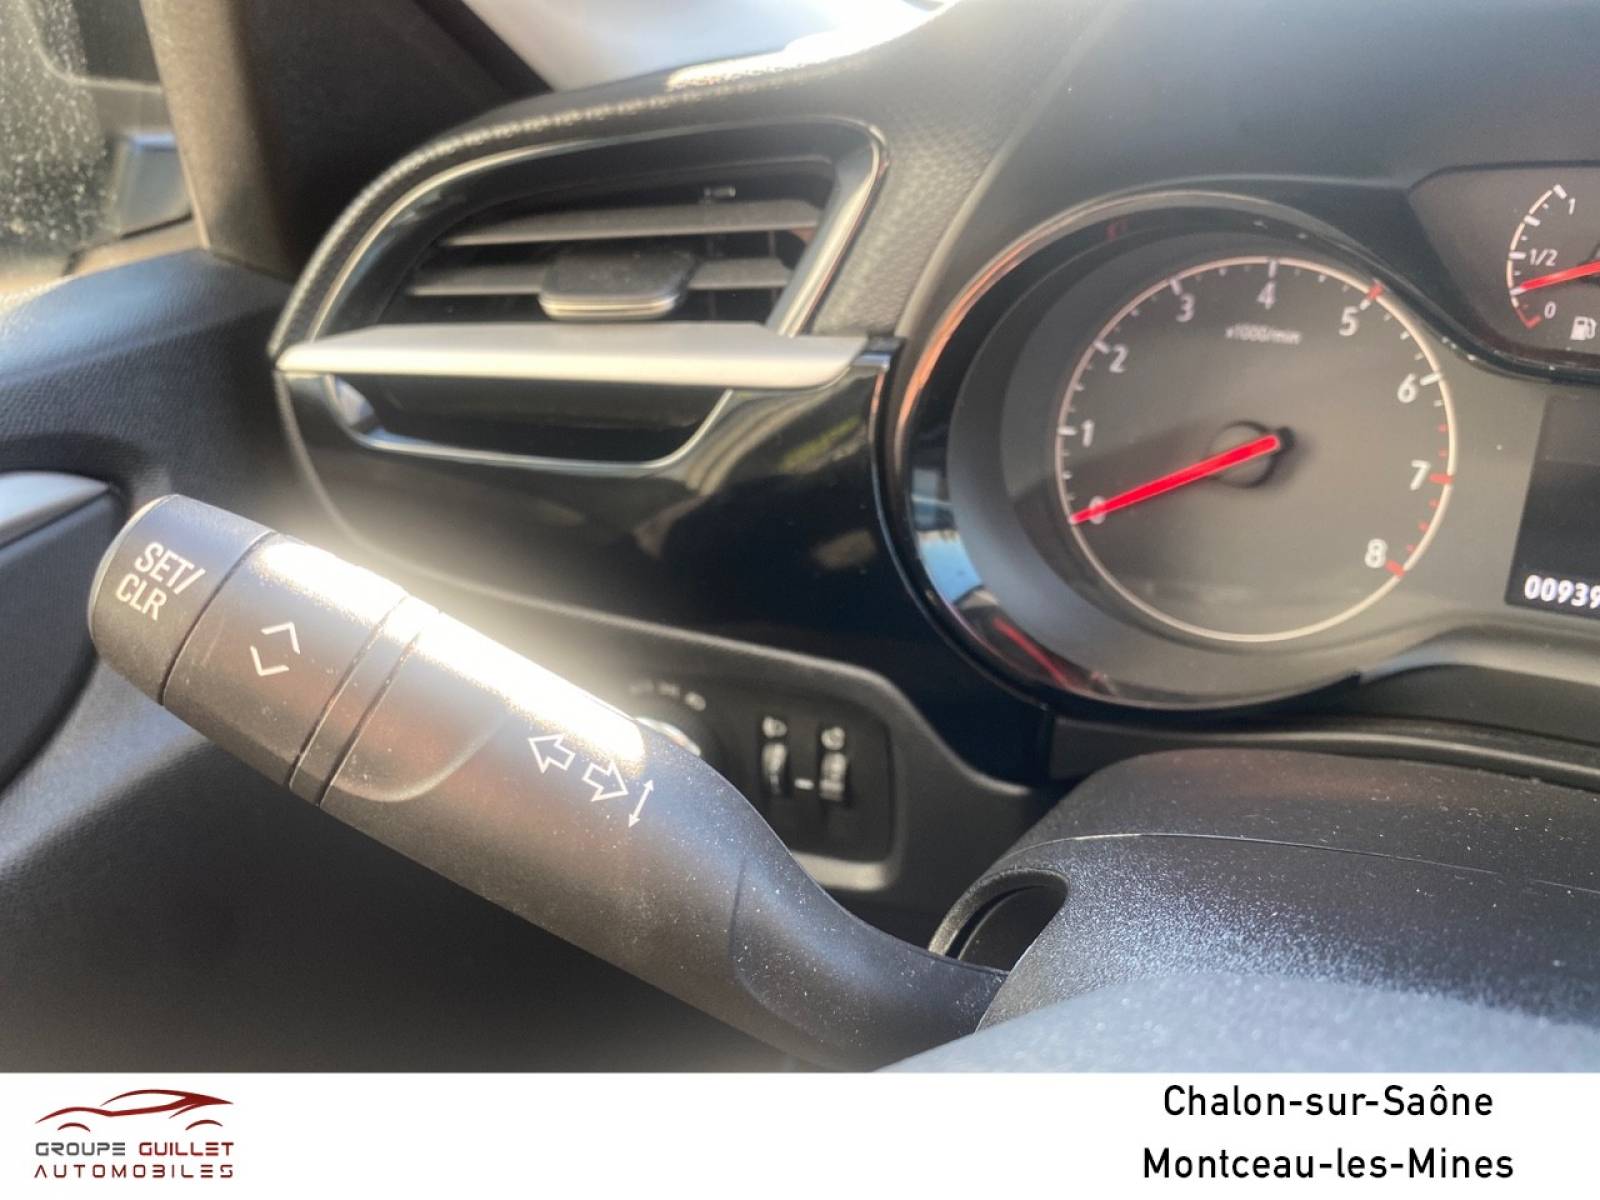 OPEL Corsa 1.2 75 ch BVM5 - véhicule d'occasion - Groupe Guillet - Opel Magicauto Chalon - 71380 - Saint-Marcel - 20